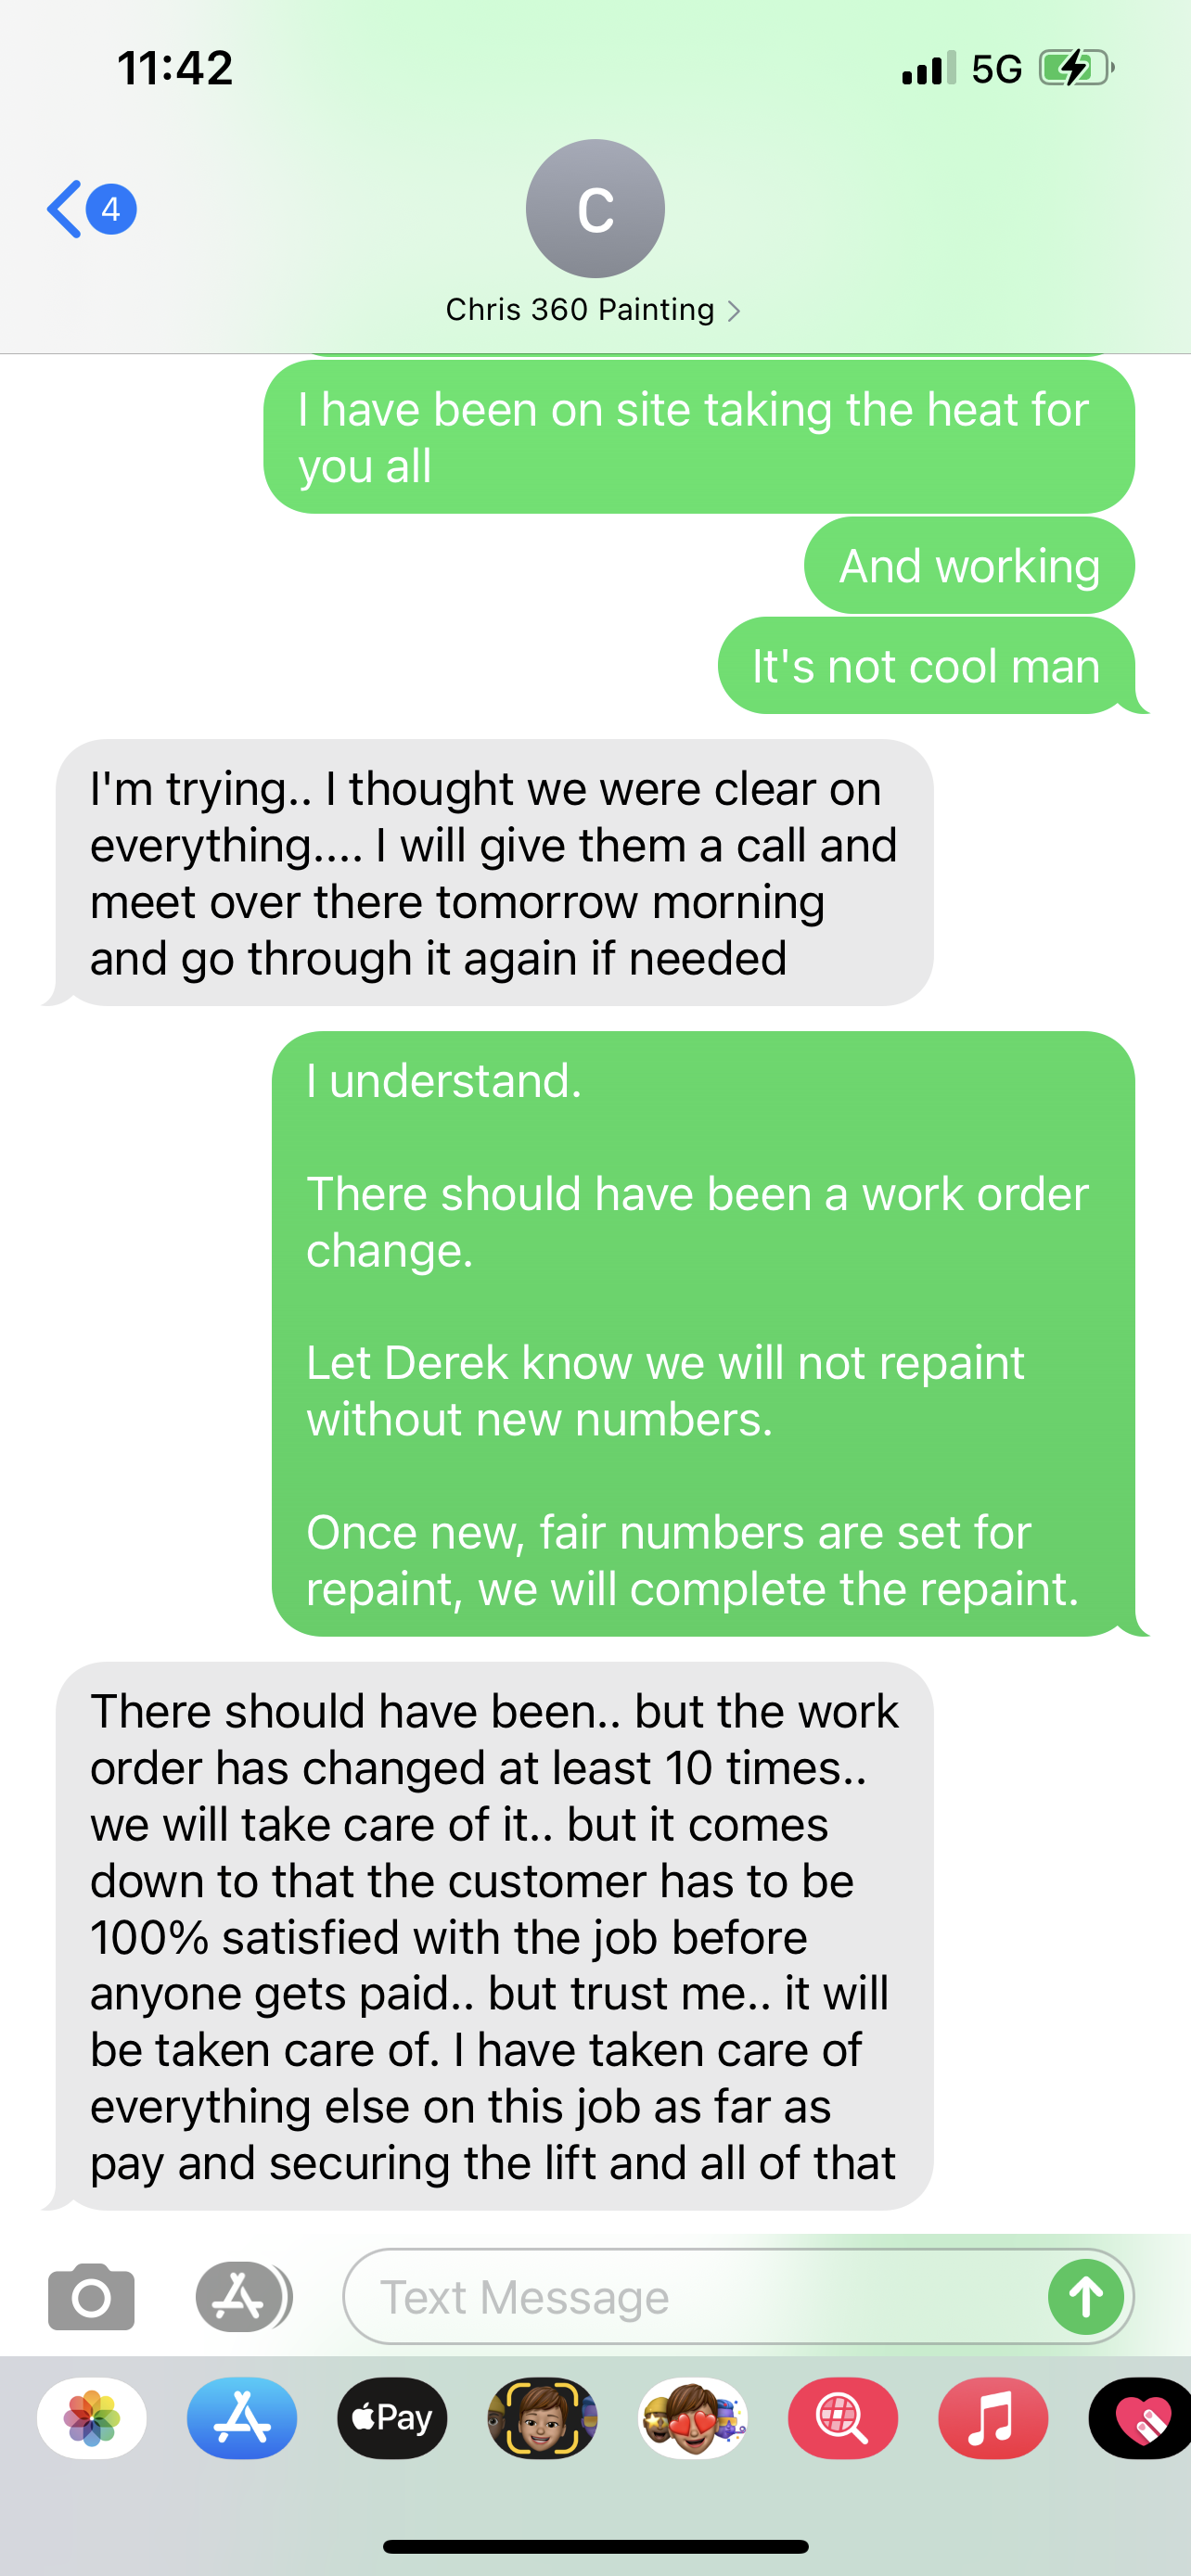 Chris admitting work order changed 10 times. 